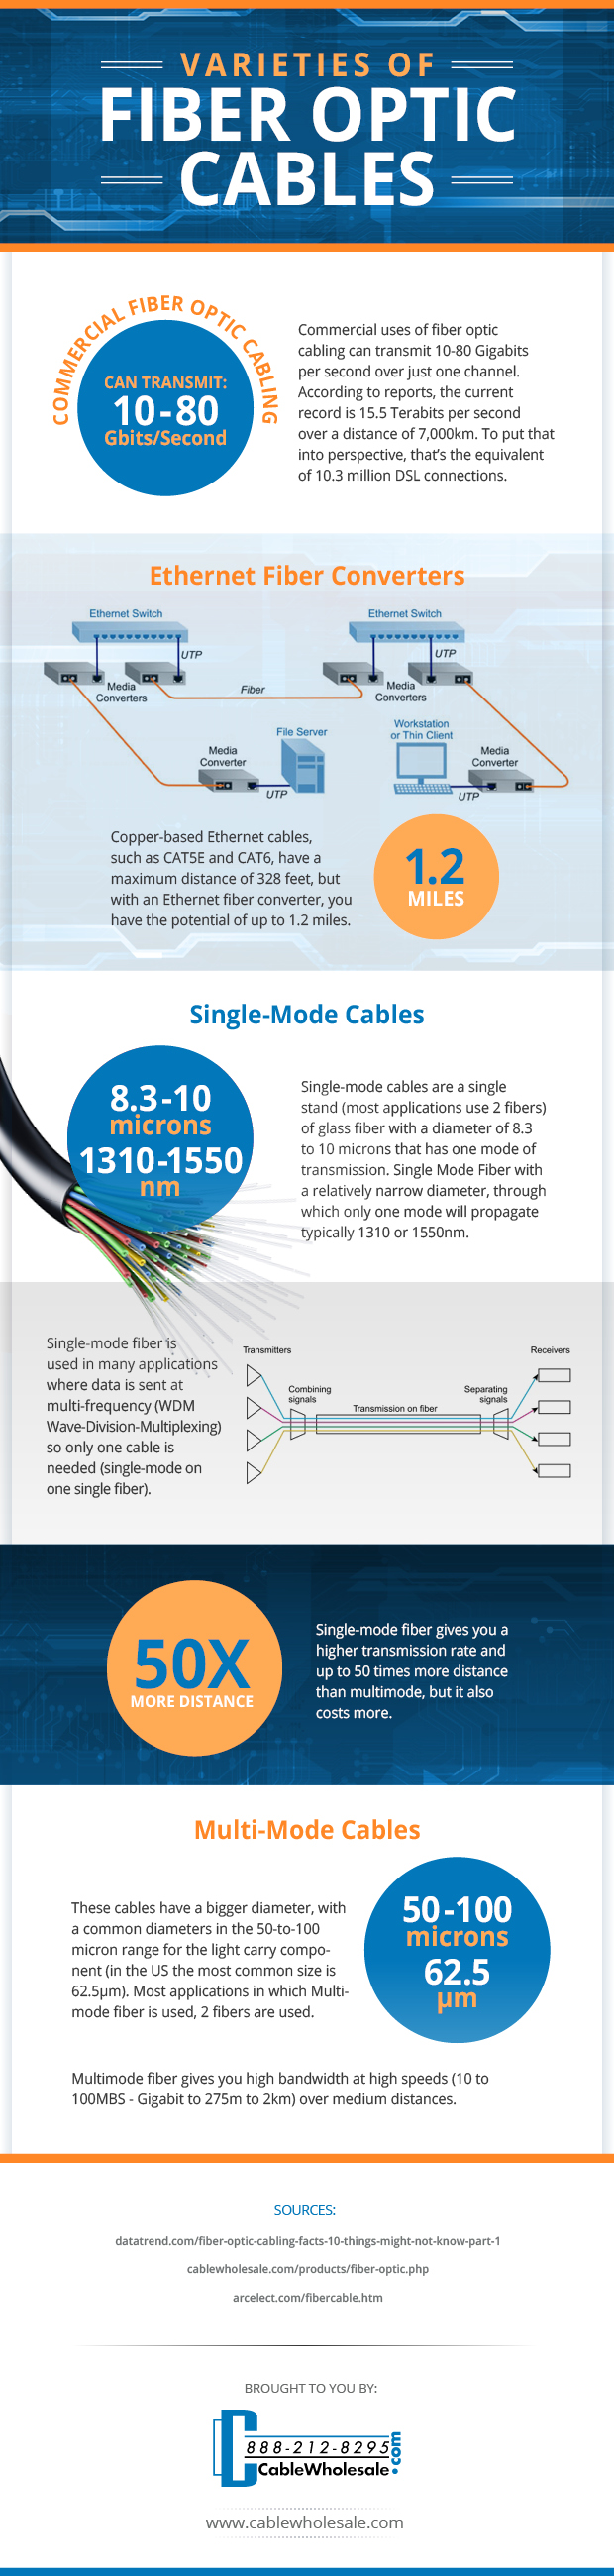 Varieties of Fiber Optic Cable